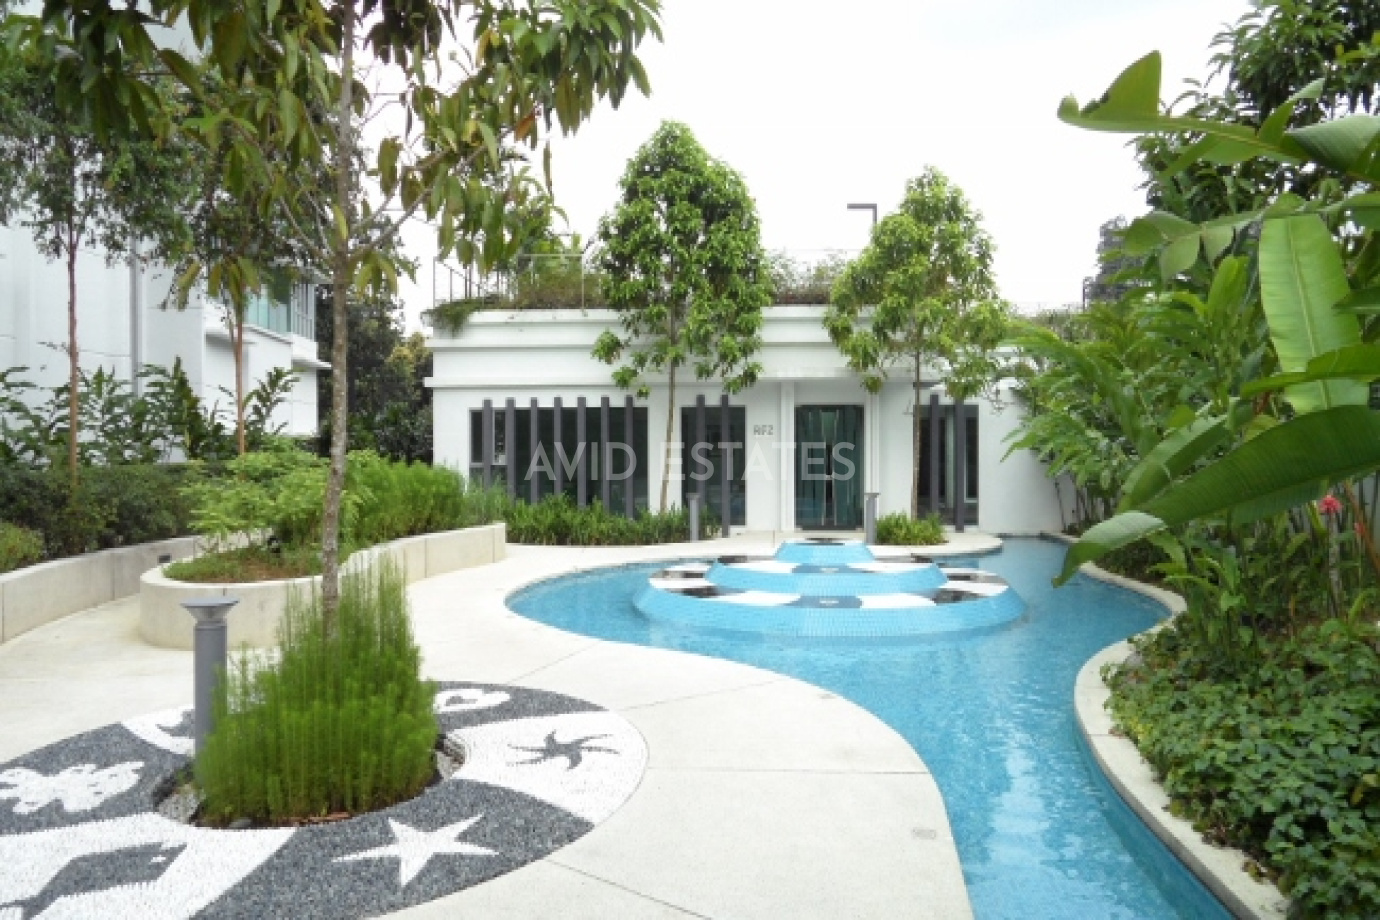 Kiaramas Danai,Kuala Lumpur, 3 Bedrooms Bedrooms, ,4 BathroomsBathrooms,Condominium / Serviced Residence,For Sale,Jalan Desa Kiara,1187